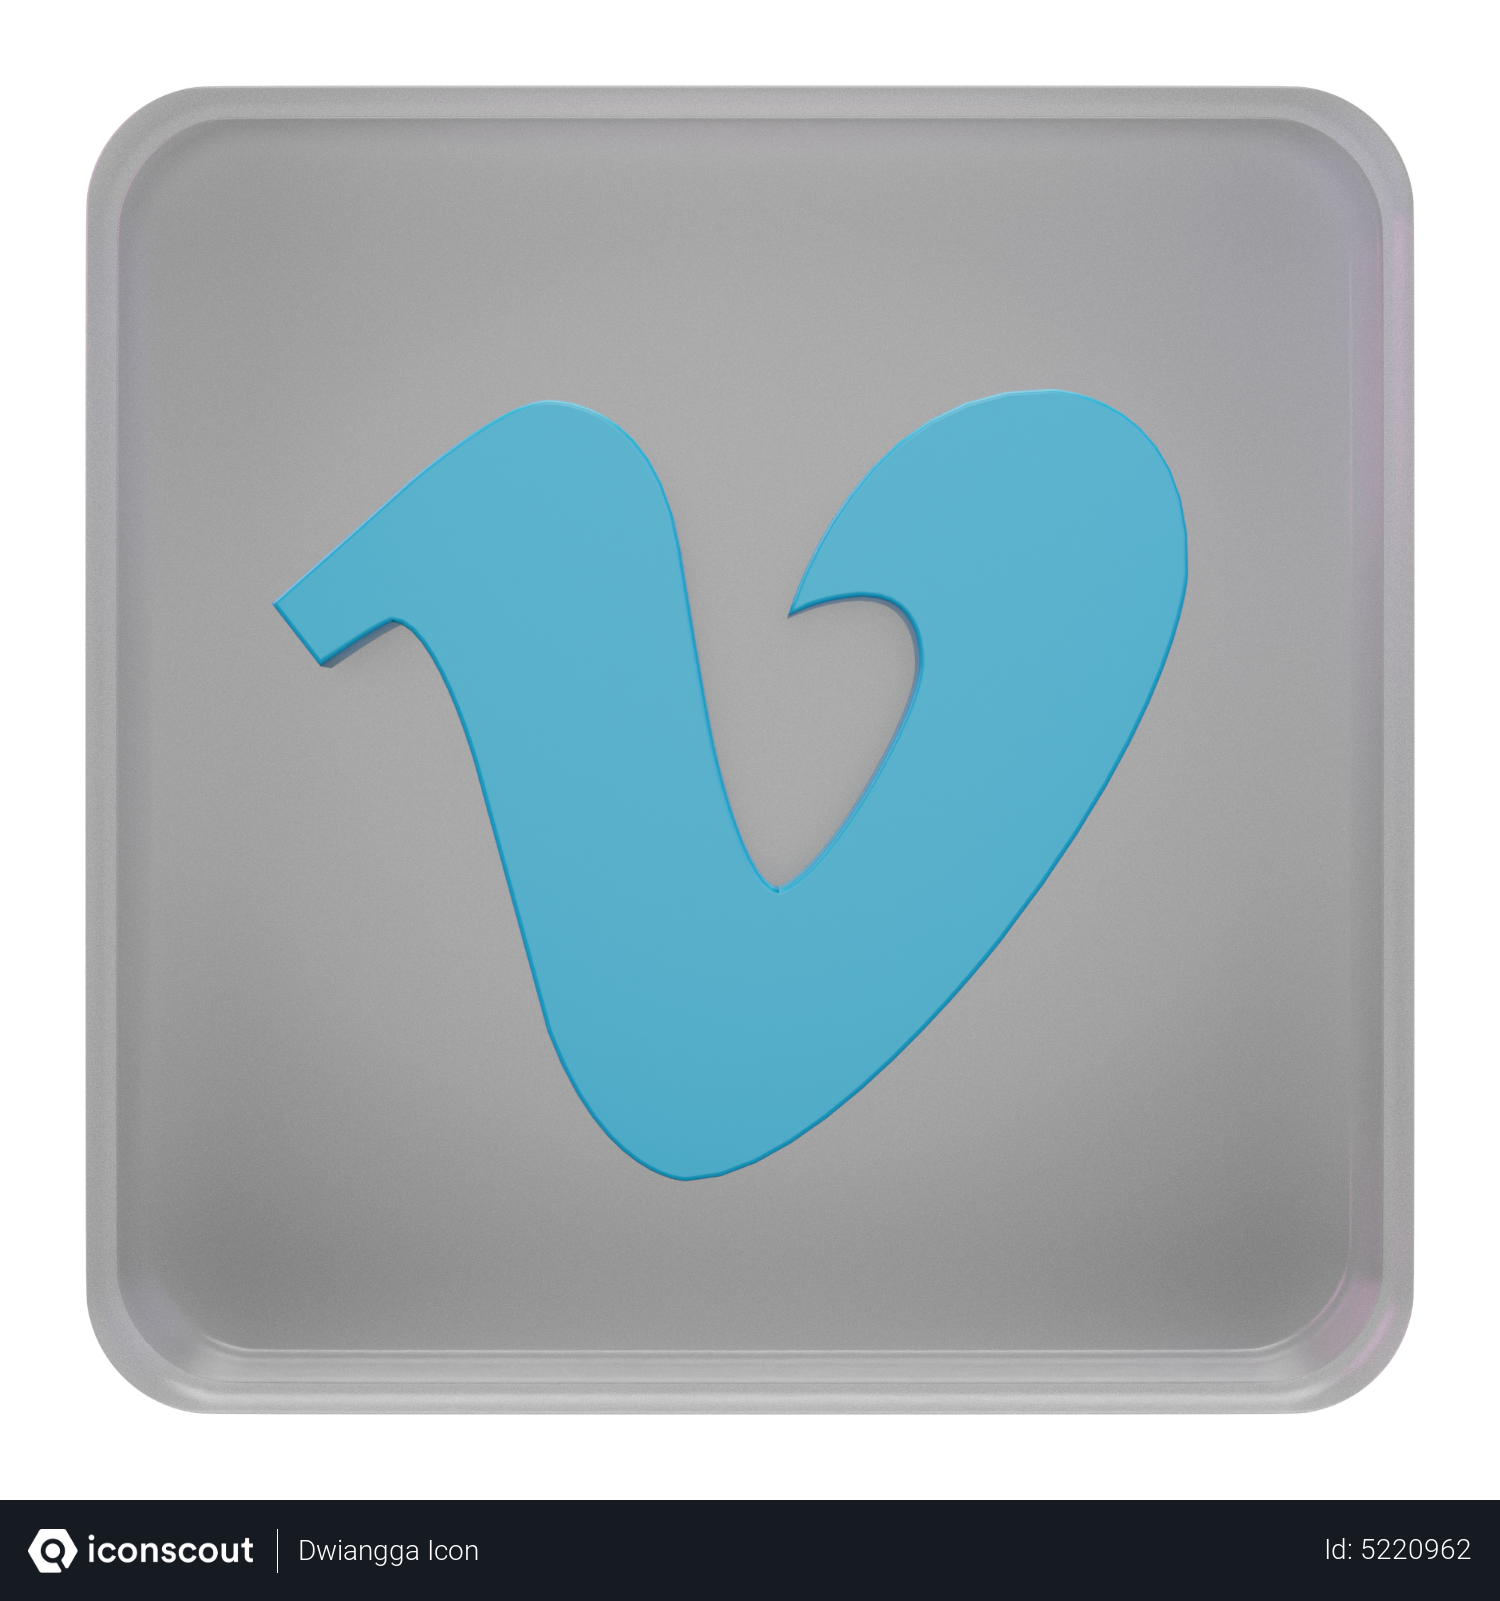 vimeo-logo - Lena Shore